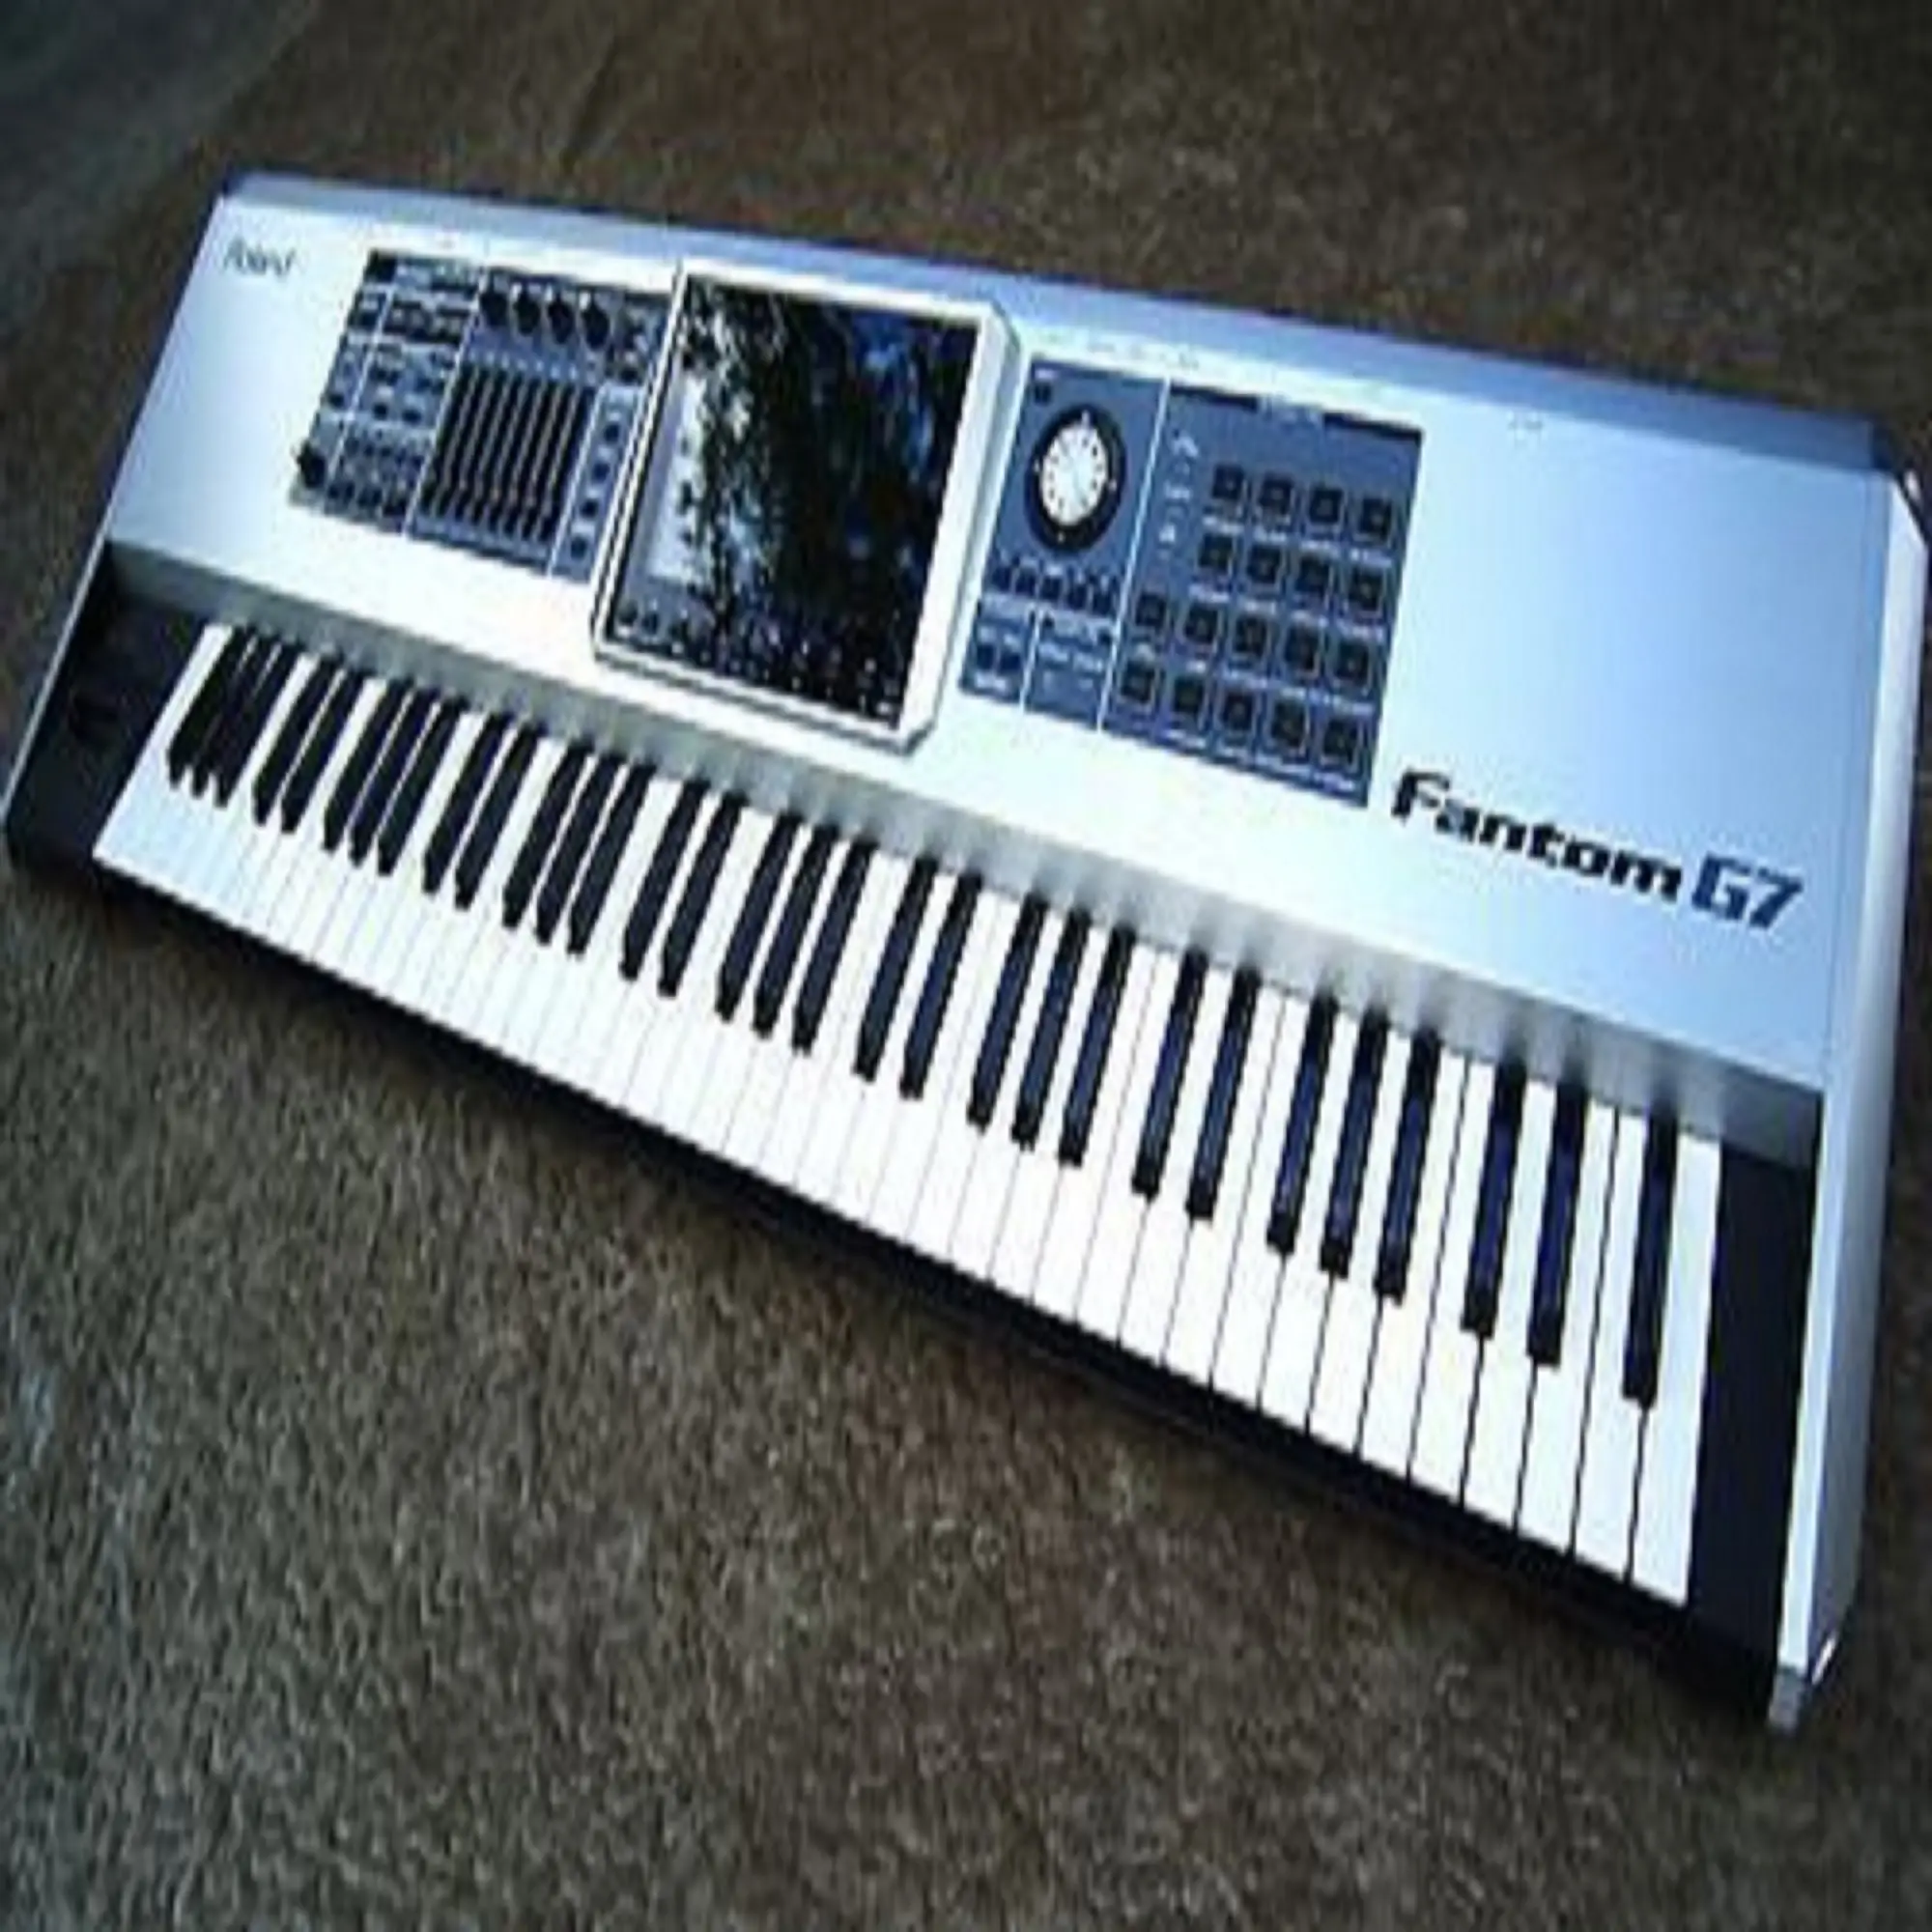 Аутентичная музыкальная рабочая станция Fantom G7 с 76 клавишами